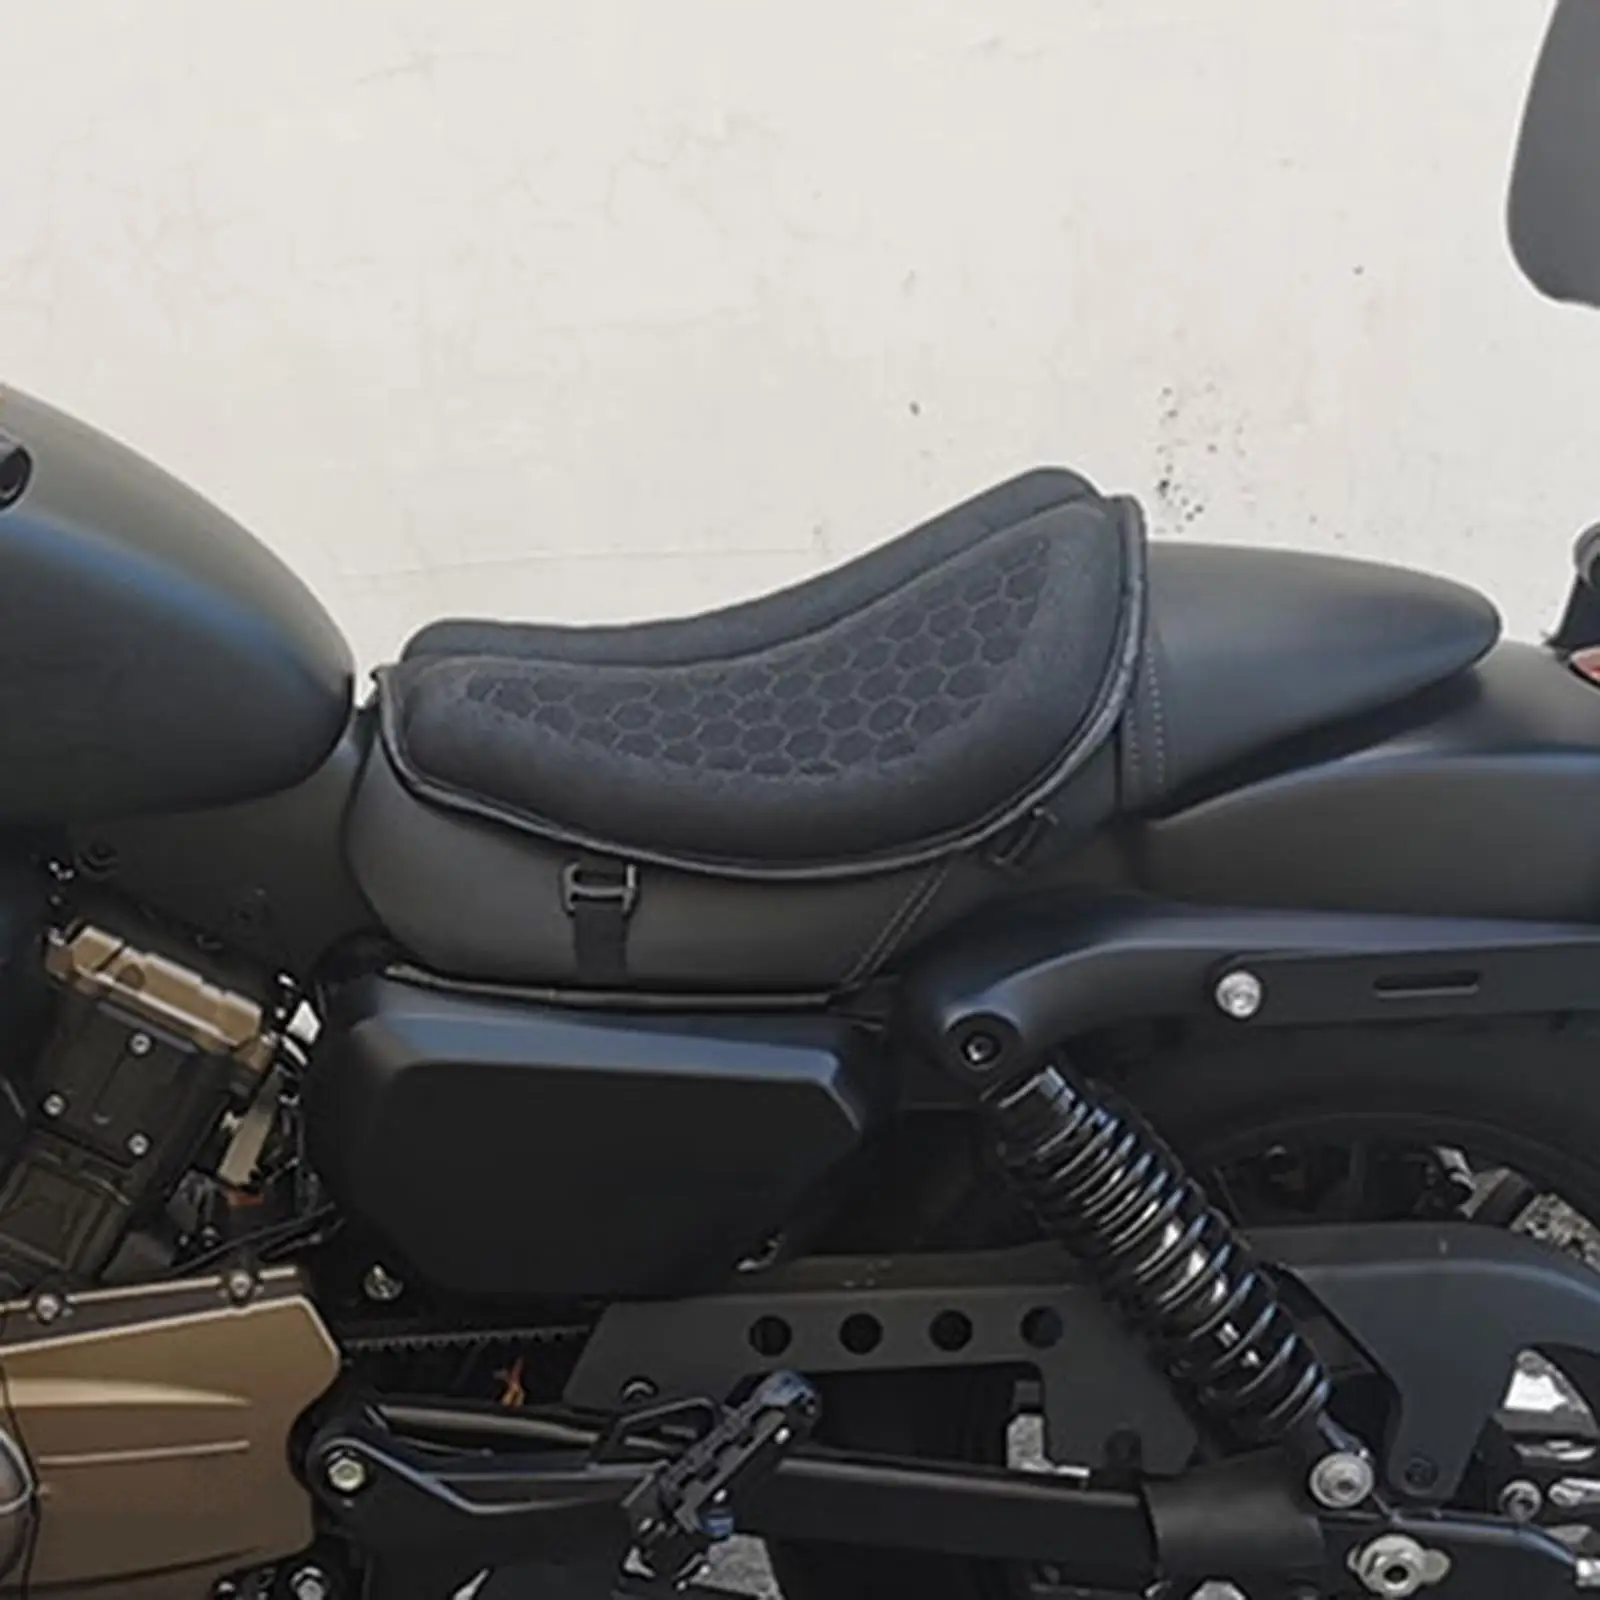 Universal Motorbike Seat Cushion, Shock Absorption Anti Slip Air Cushion Seat Pad for Bikes Electric Cars Long Distance Riding